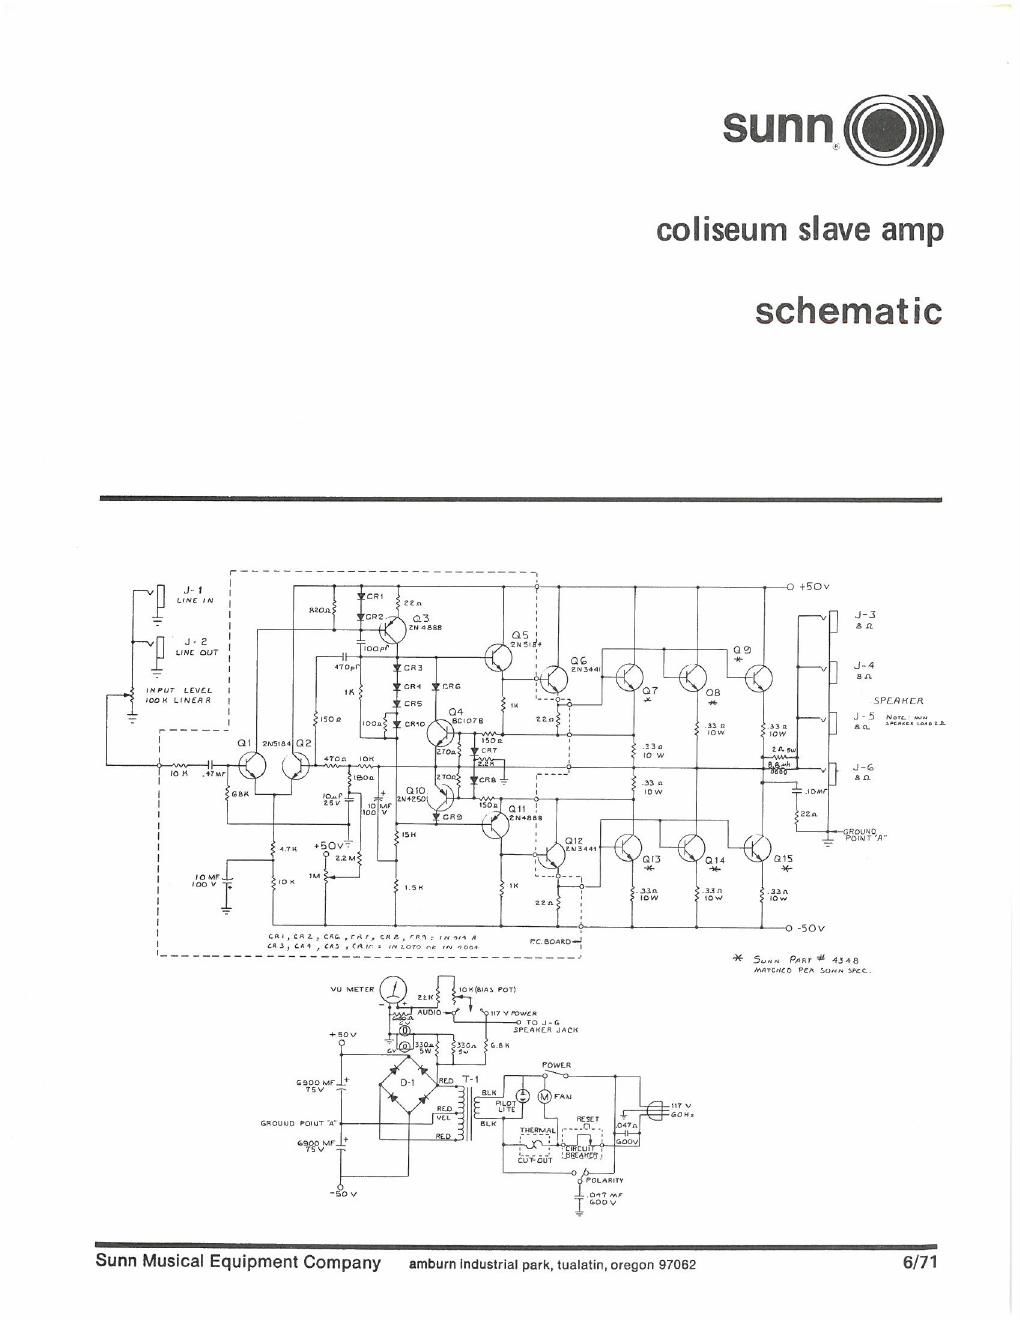 sunn coliseum slave amp schematic